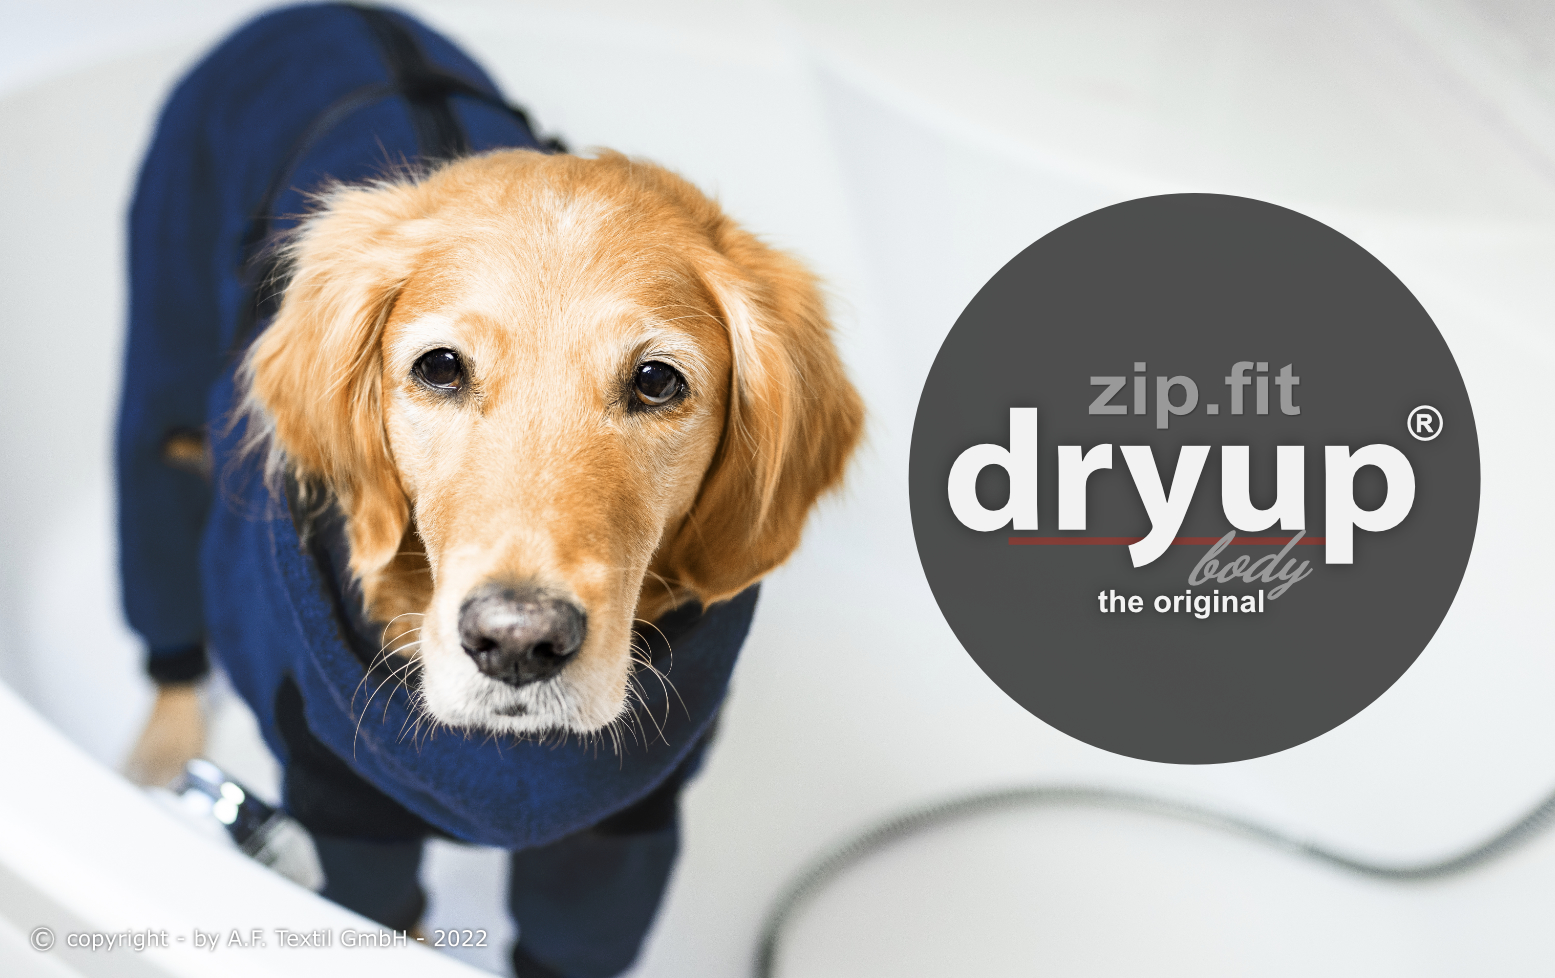 Dryup® body zip.fit® marine